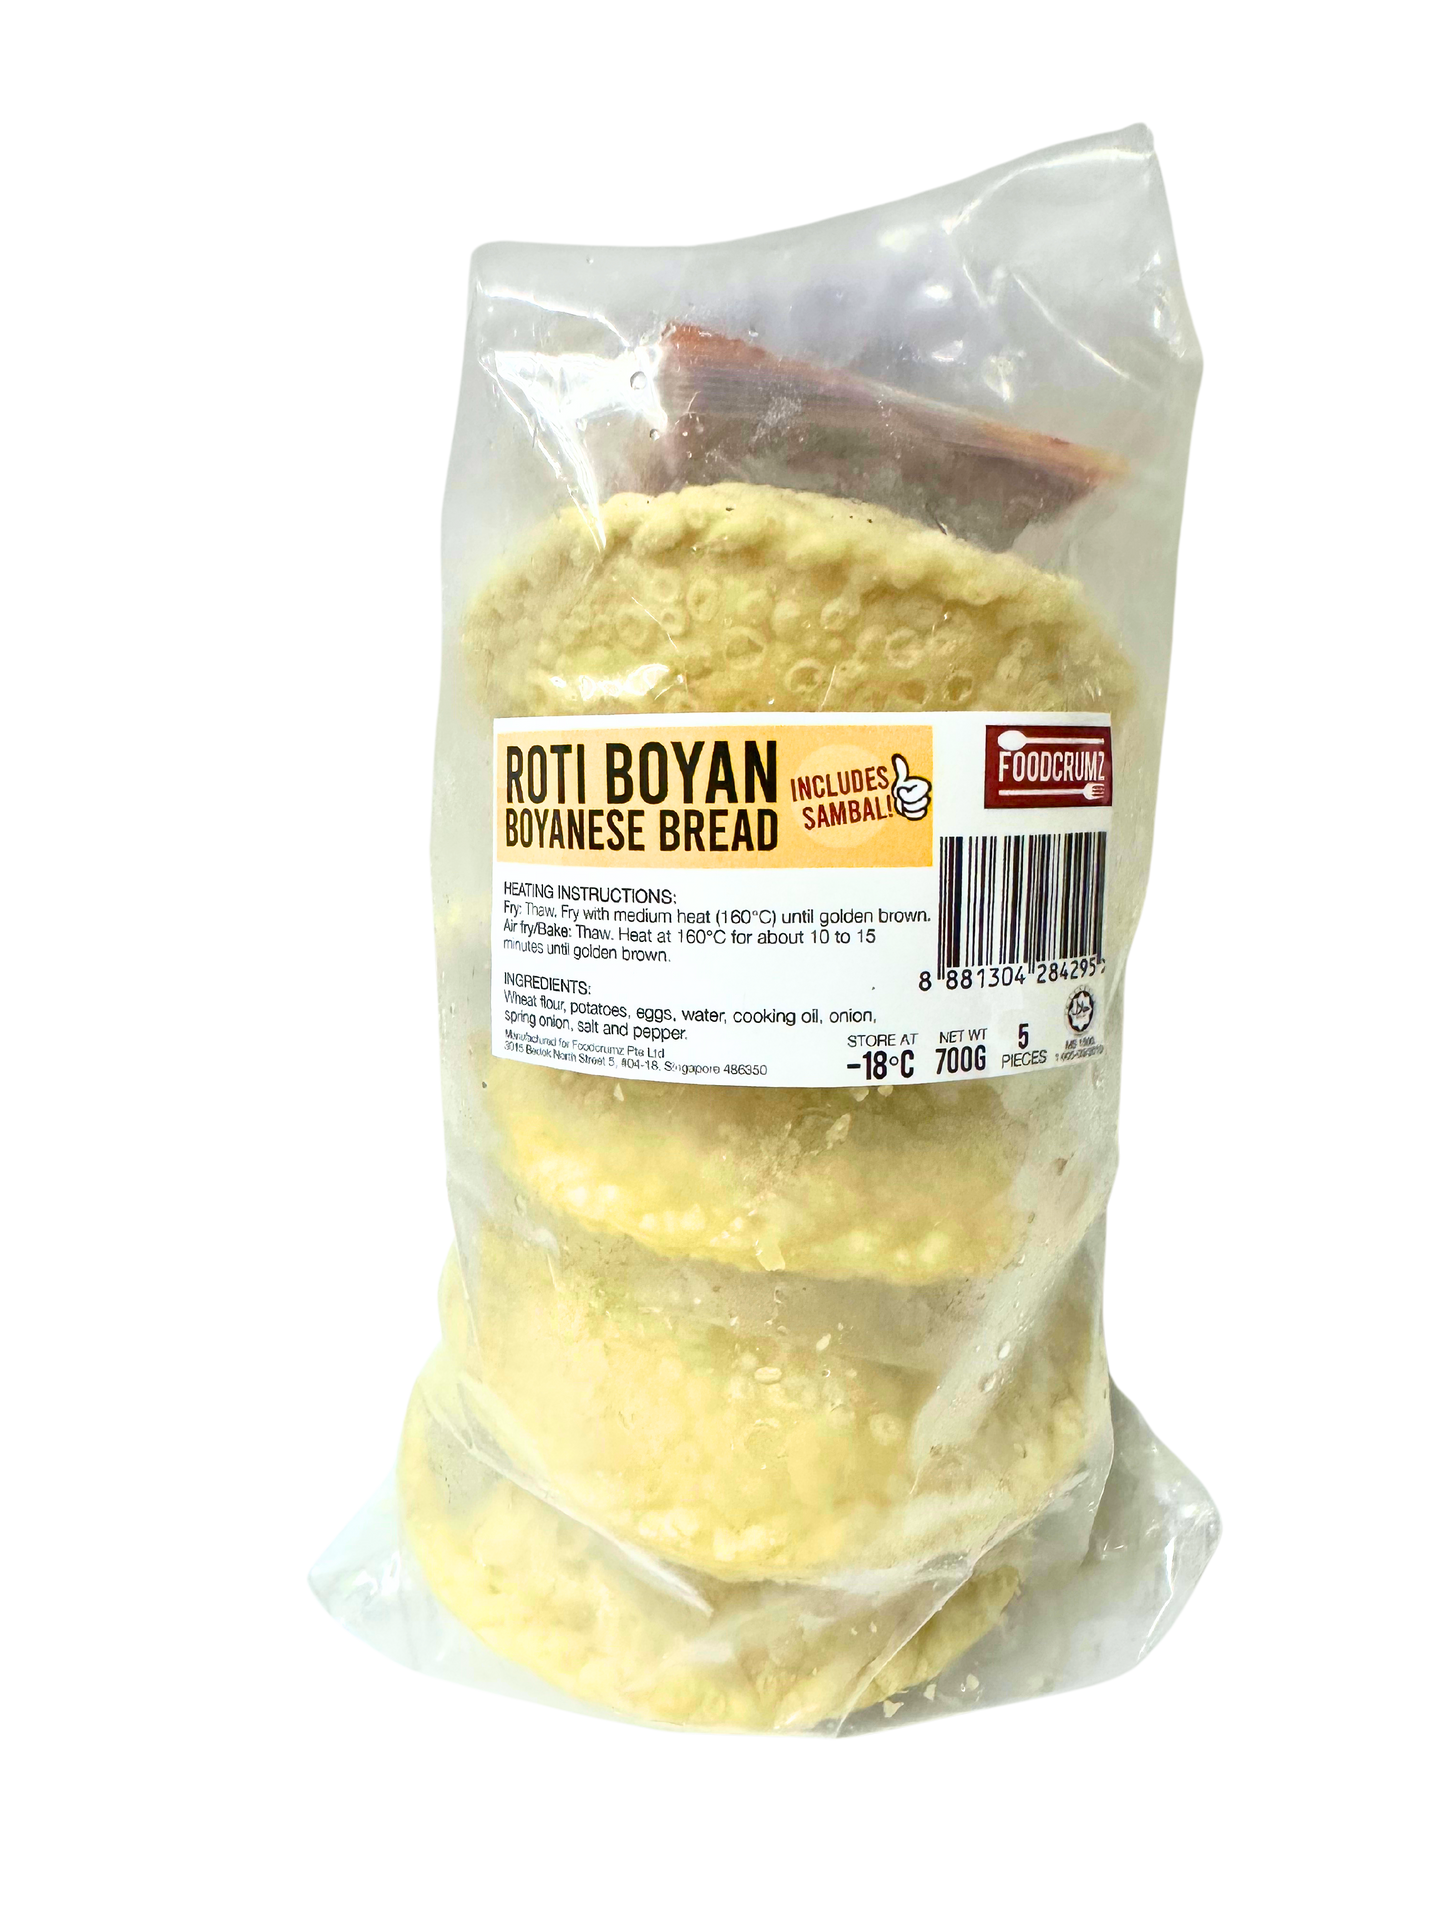 Roti Boyan / Boyanese Bread 700g (Large Size!) with Sambal